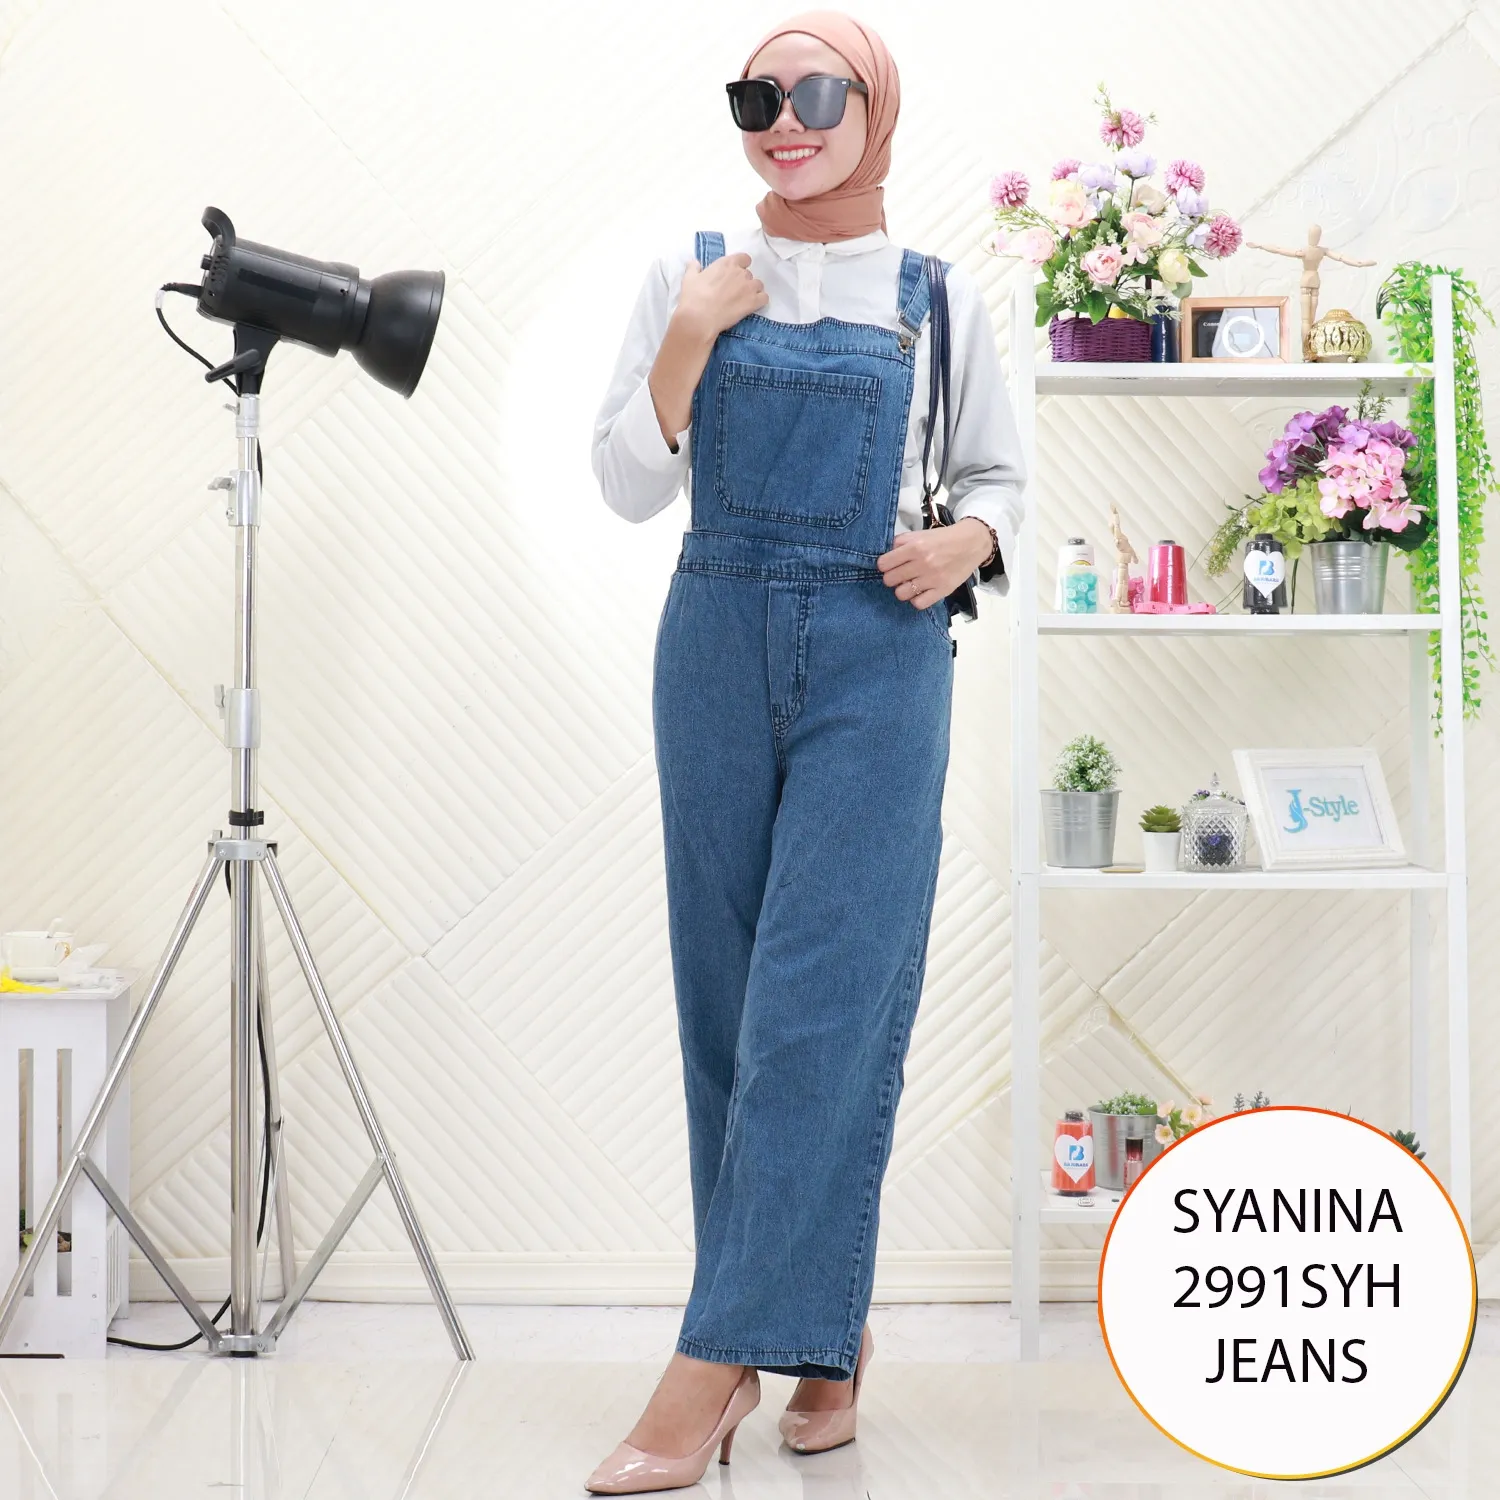 Syanina Overall Jeans Wash Saku Depan 2991SYH Jean wash - bajubaru.id, Belanja Online di bajubaru.id saja 